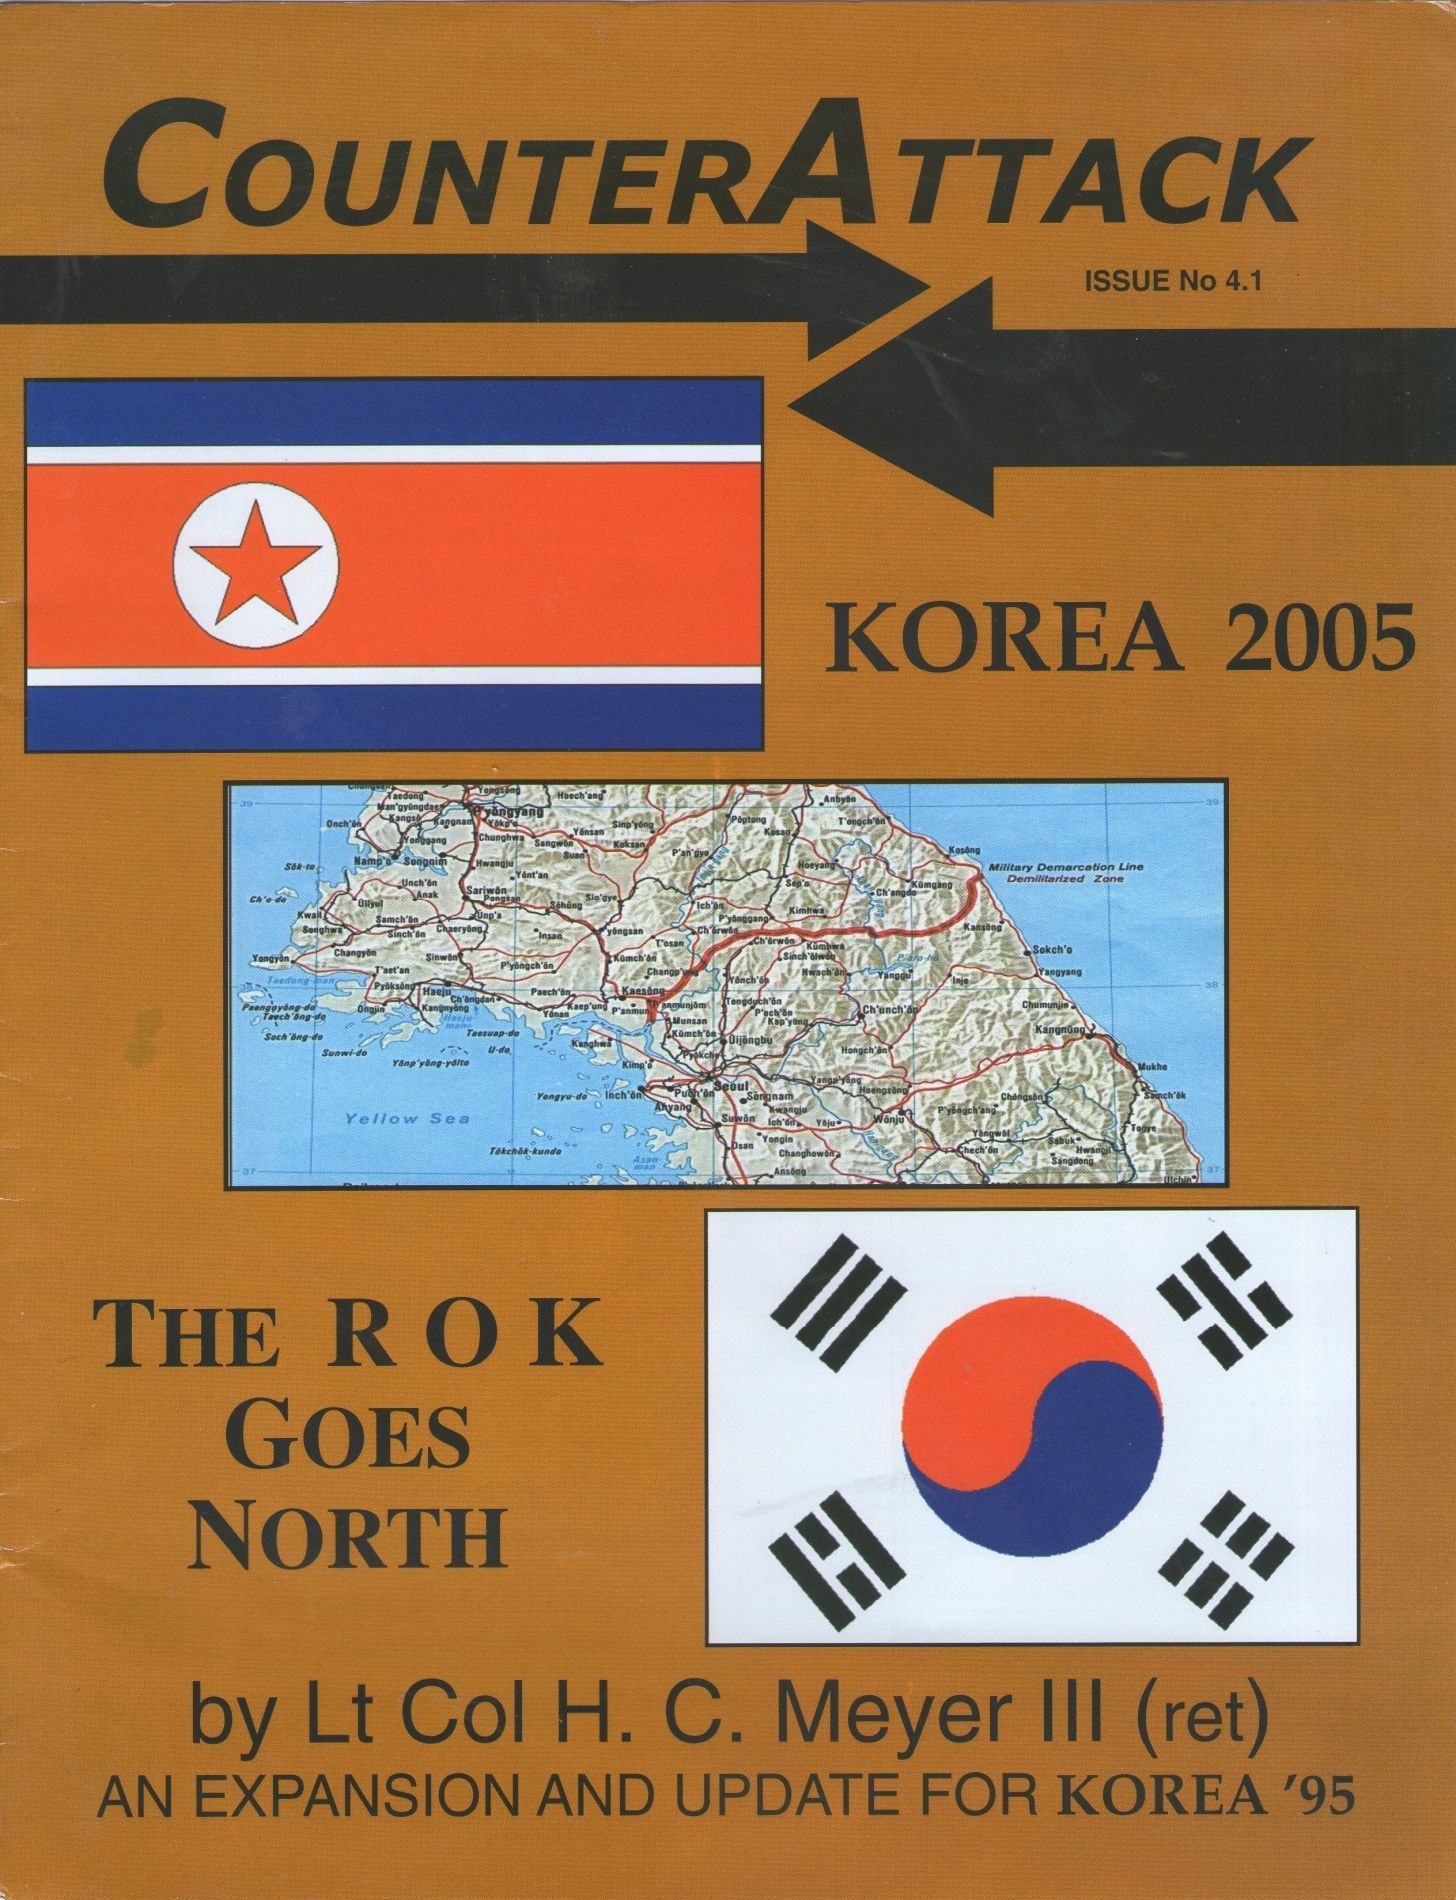 KOREA 2005: The ROK Goes North